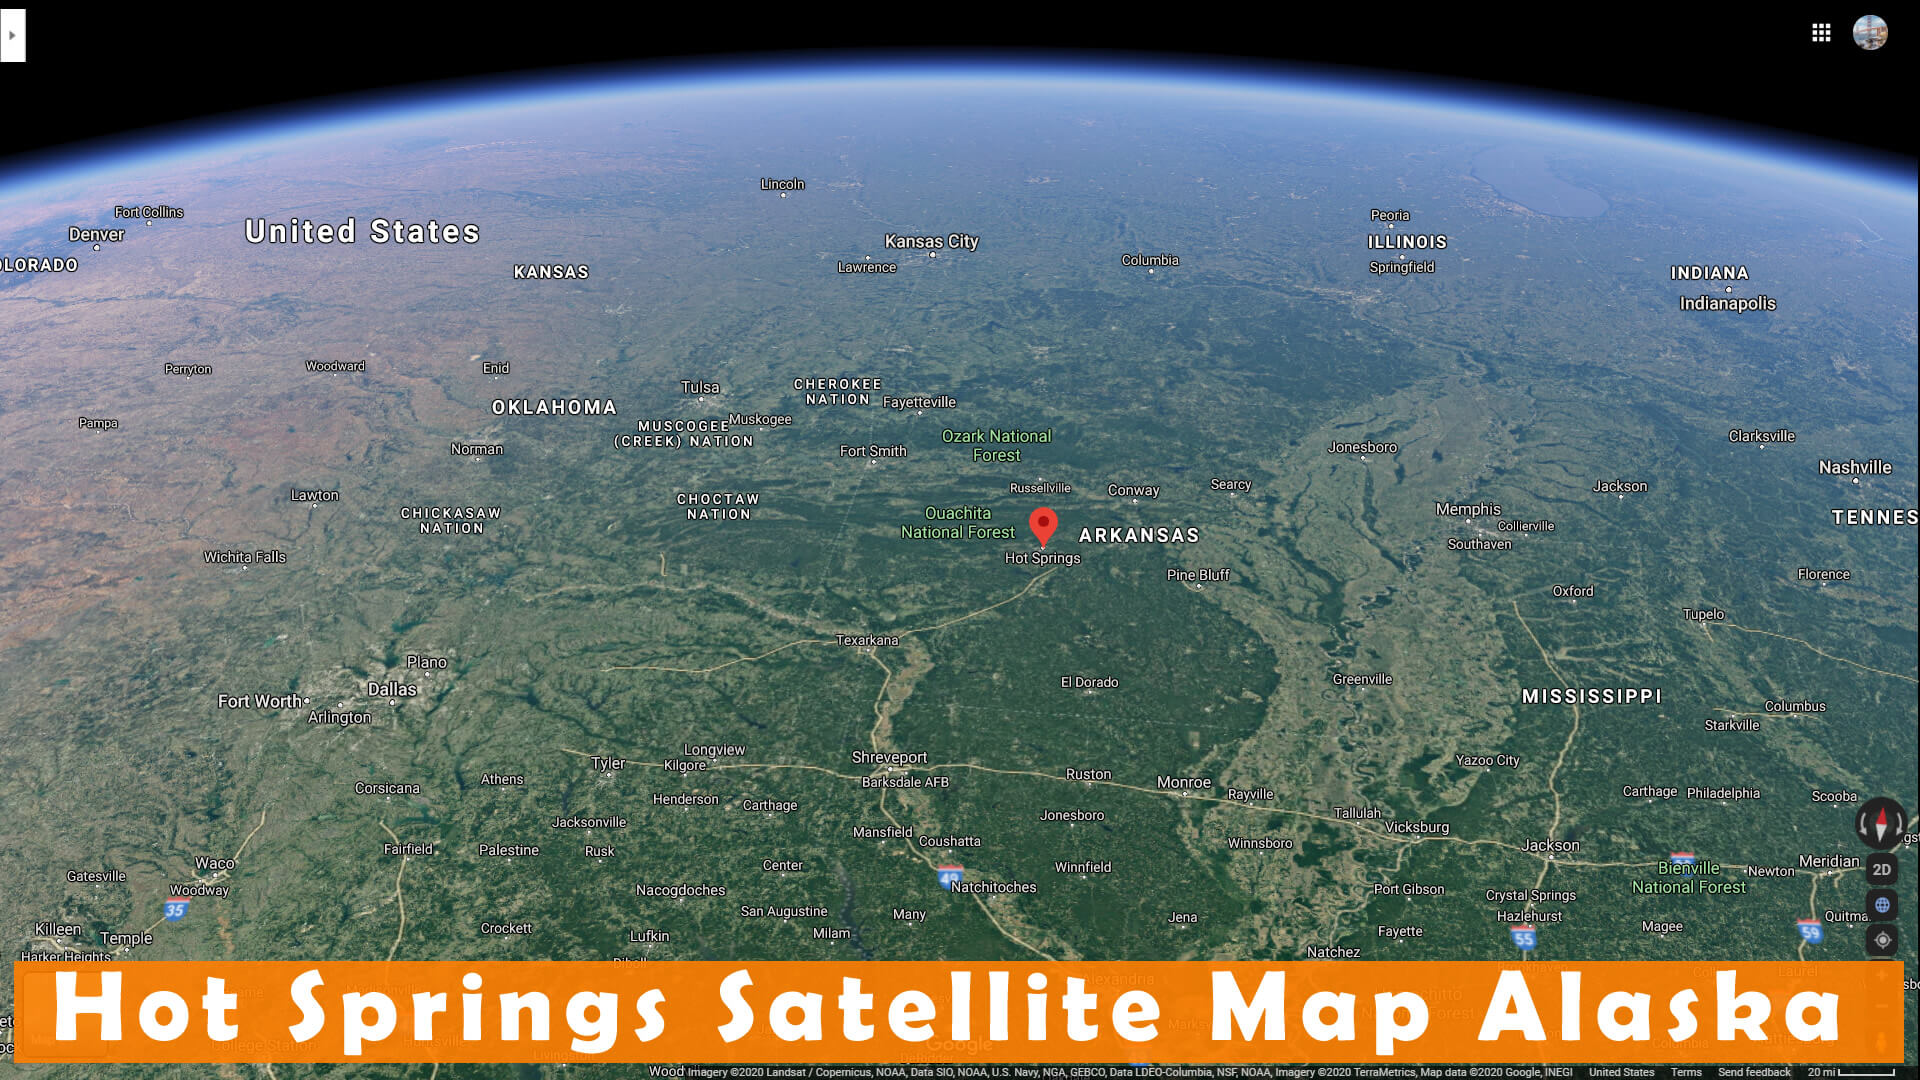 Hot Springs Satellite Map Alaska